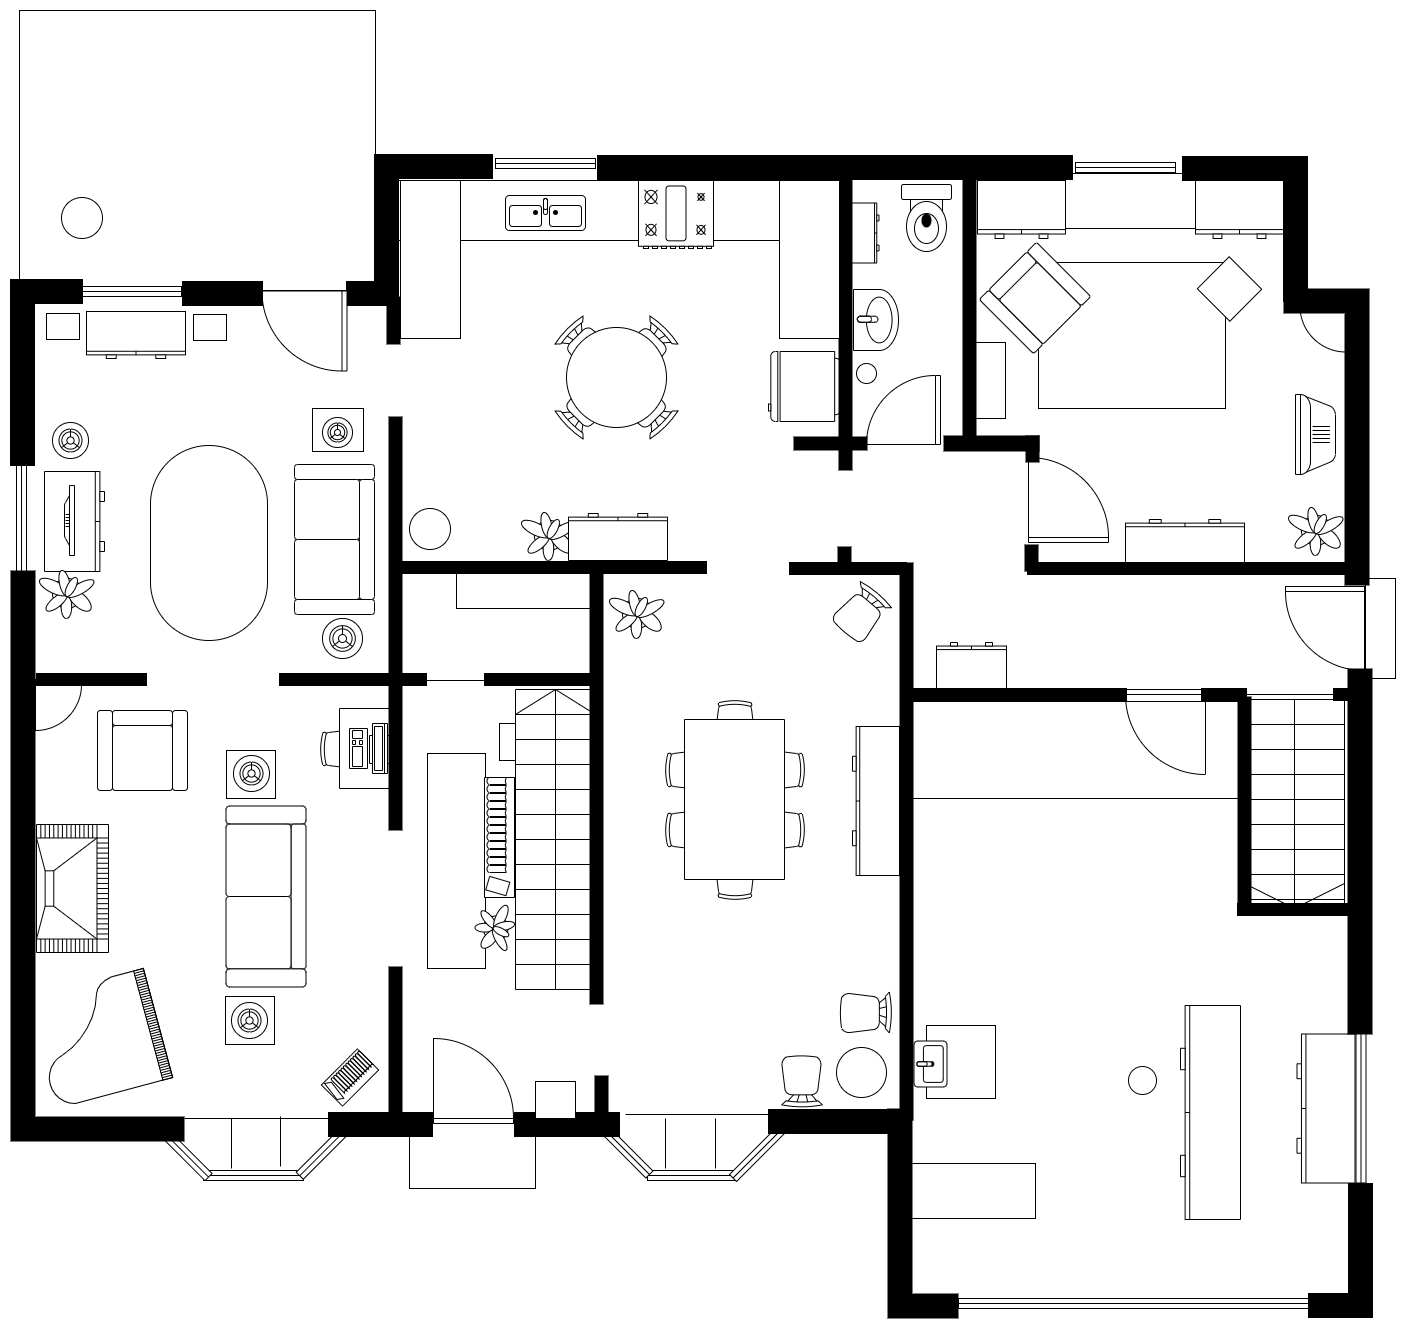 A floorplan created in diagrams.net